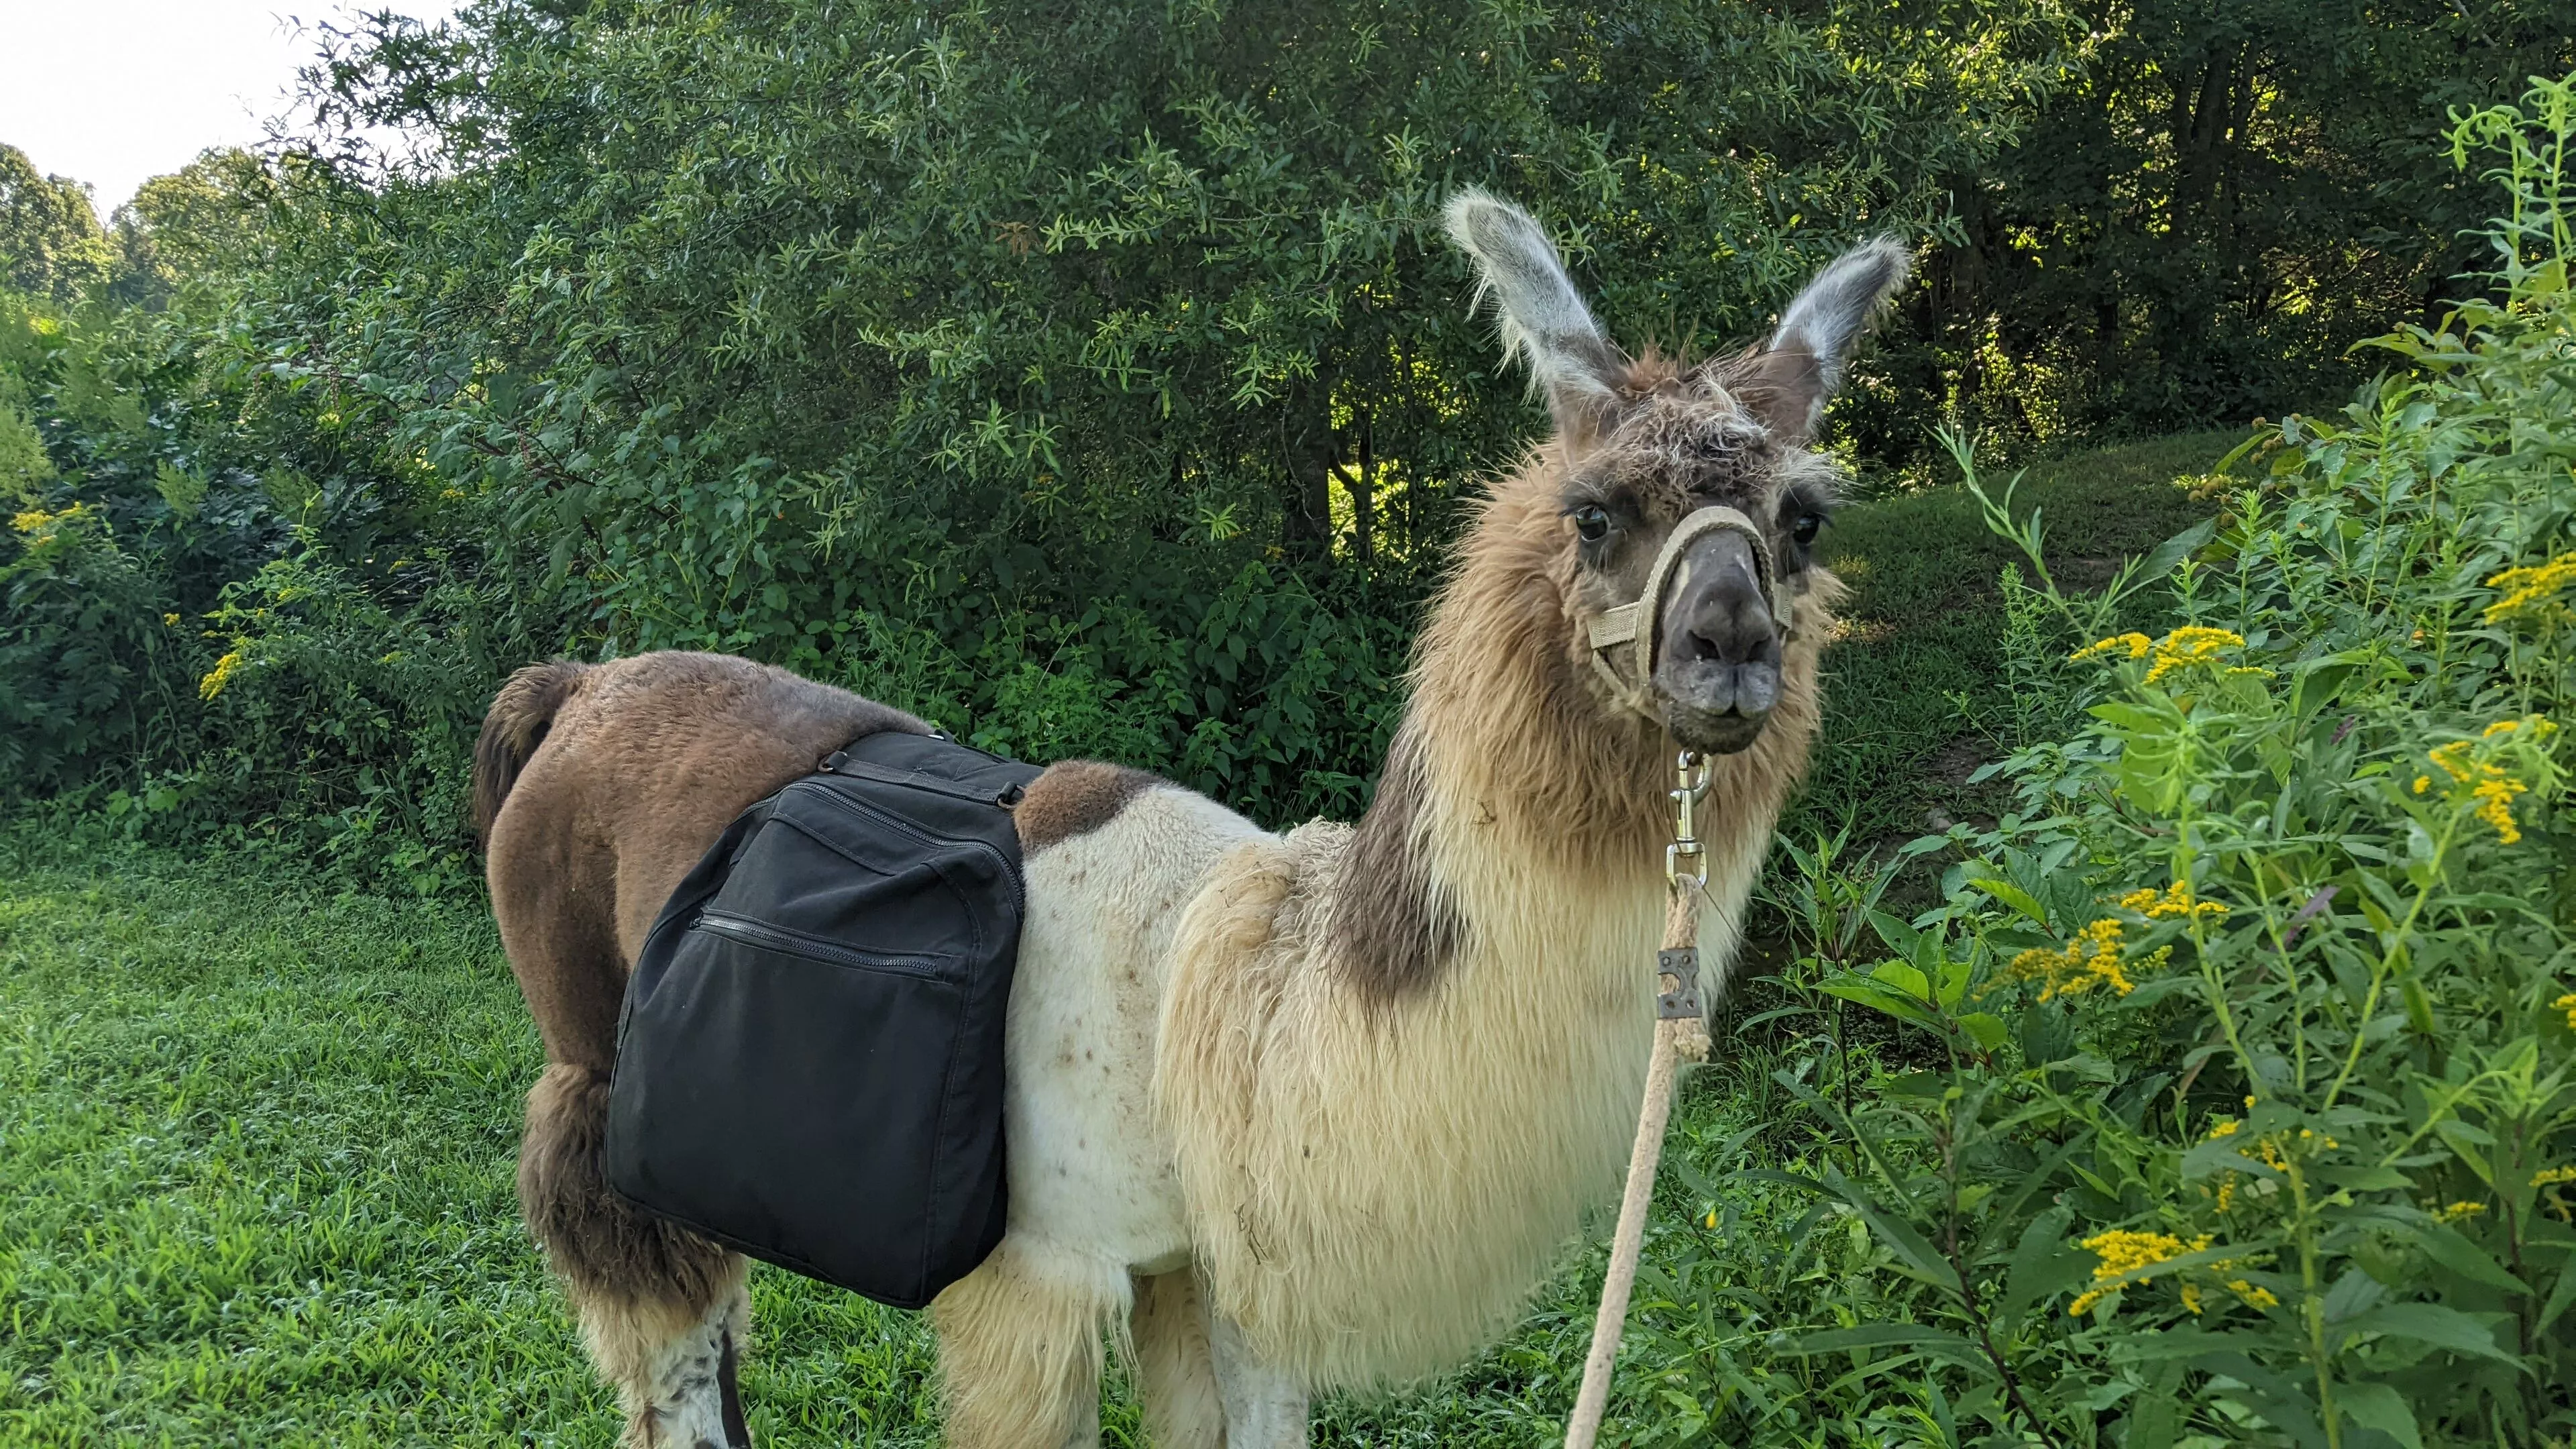 An image of a llama named Chennai wearing a pack